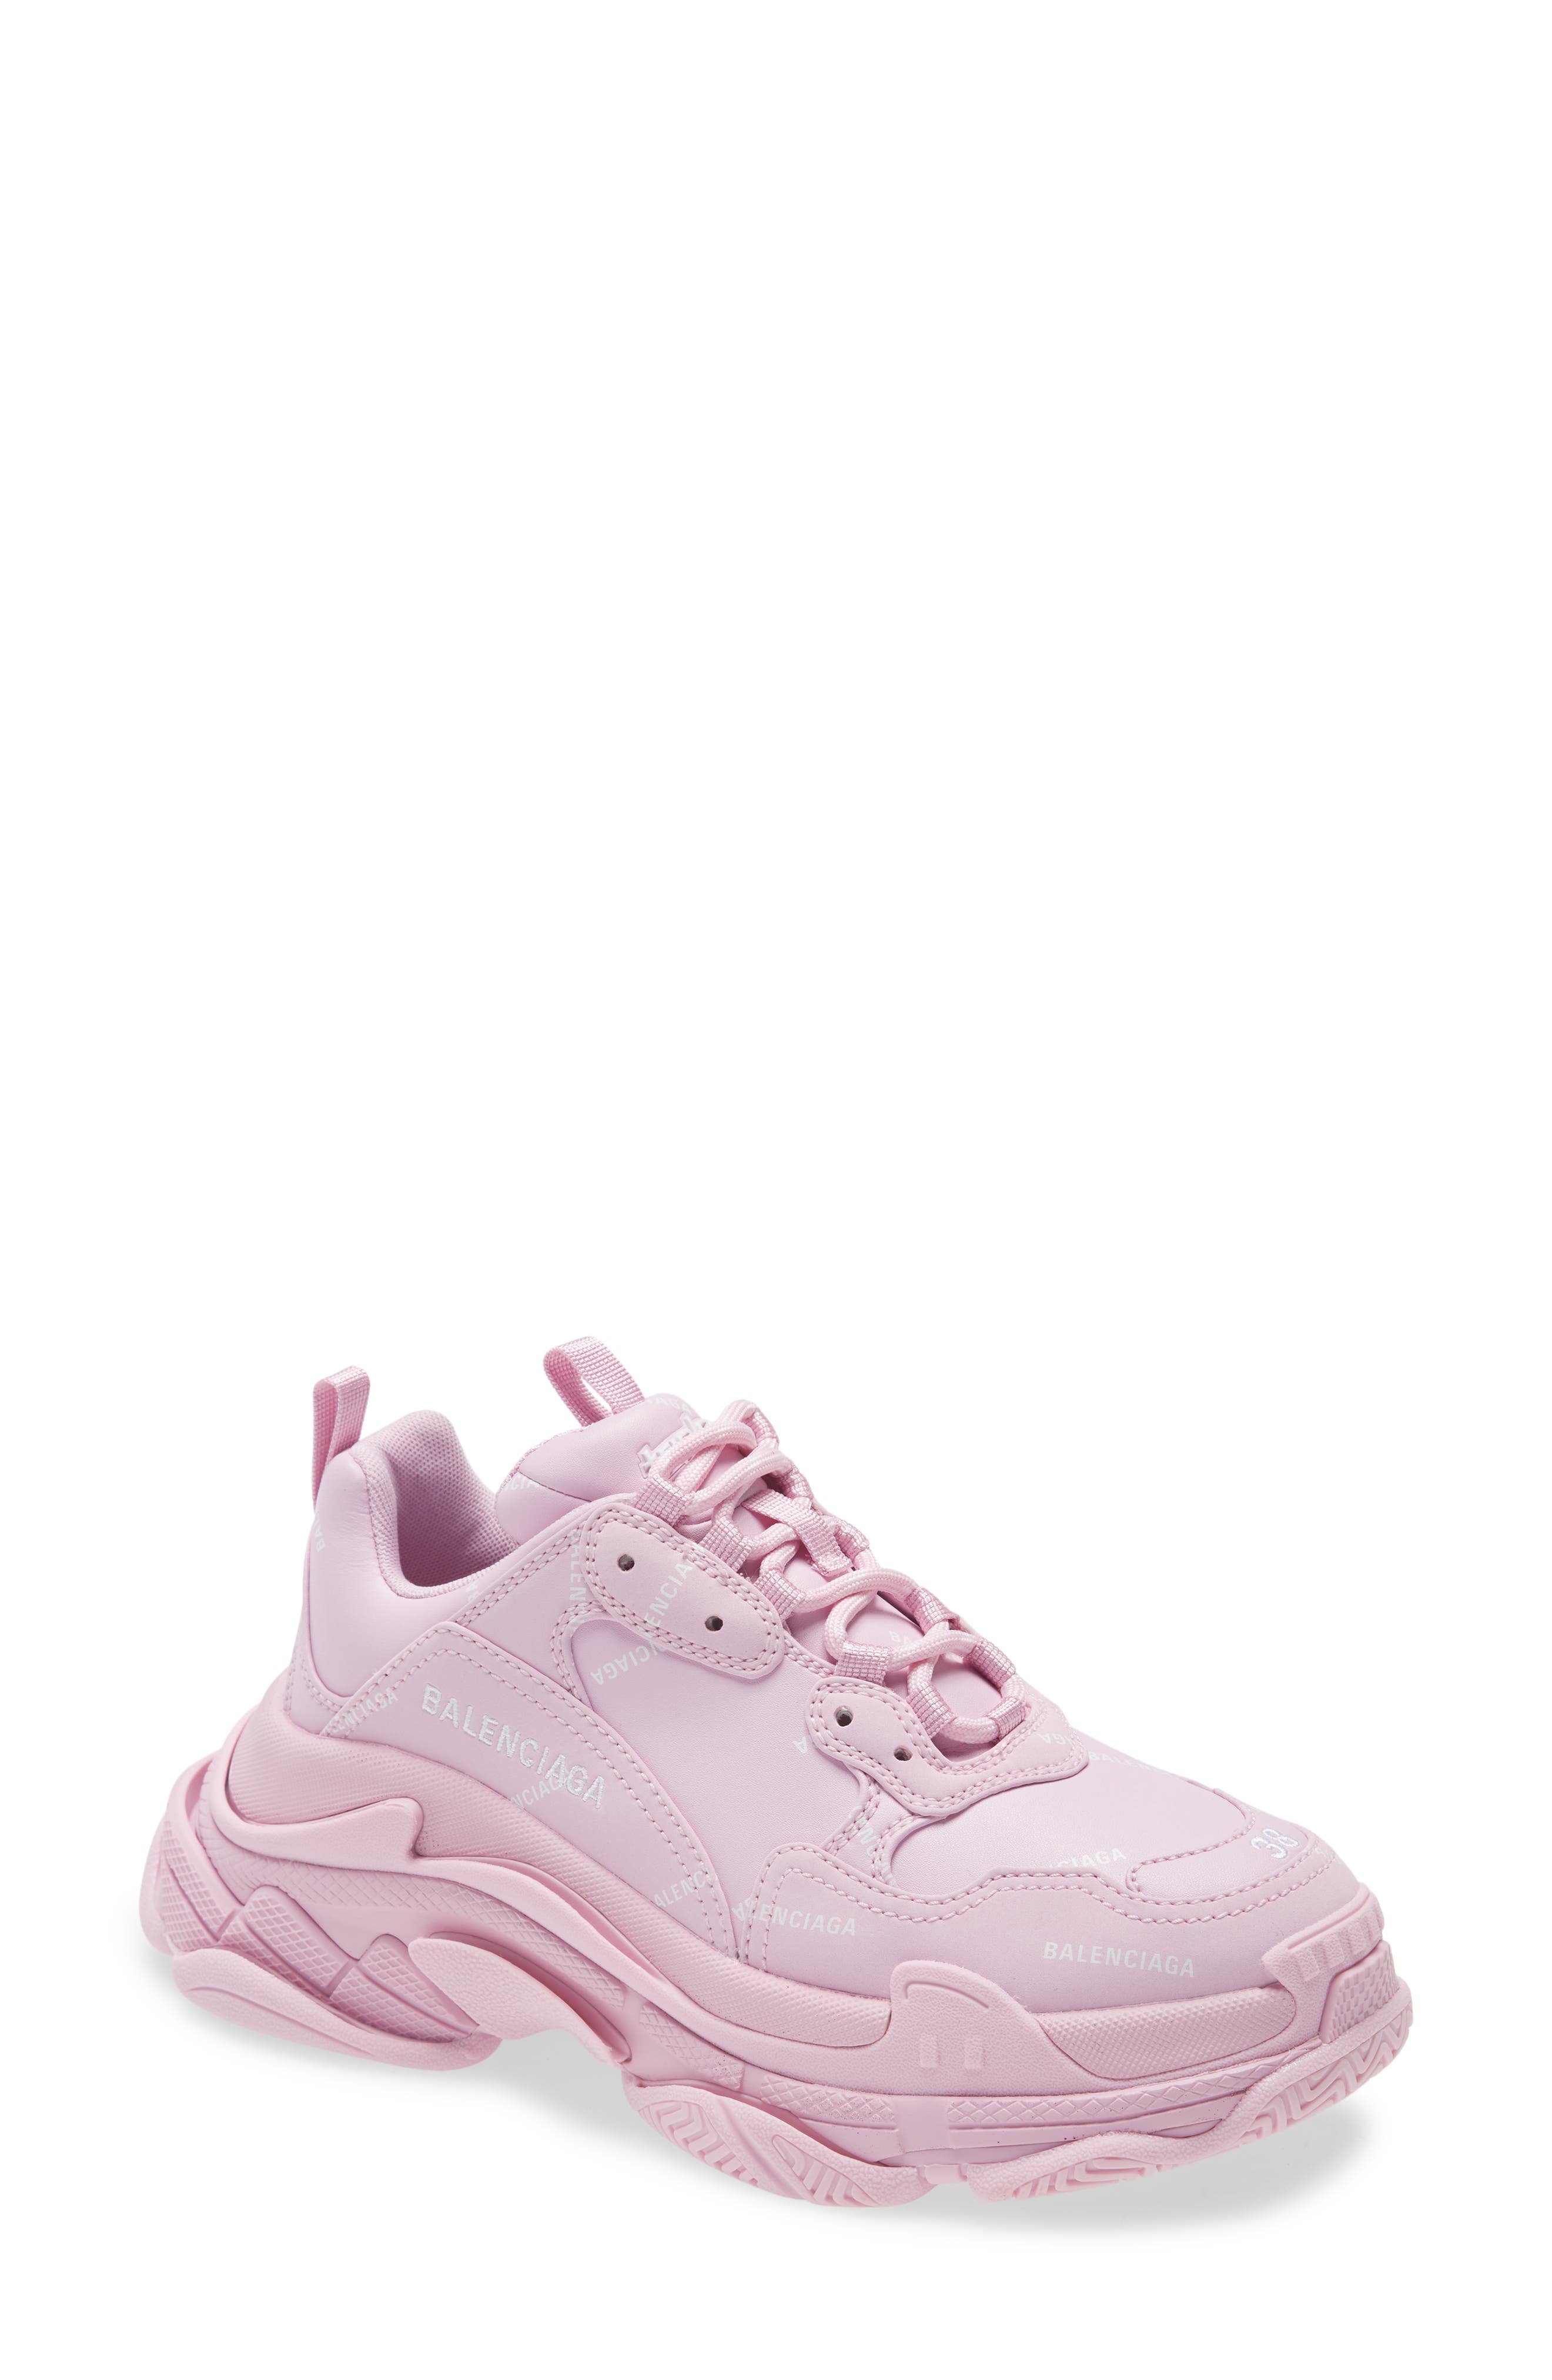 balenciaga light pink trainers